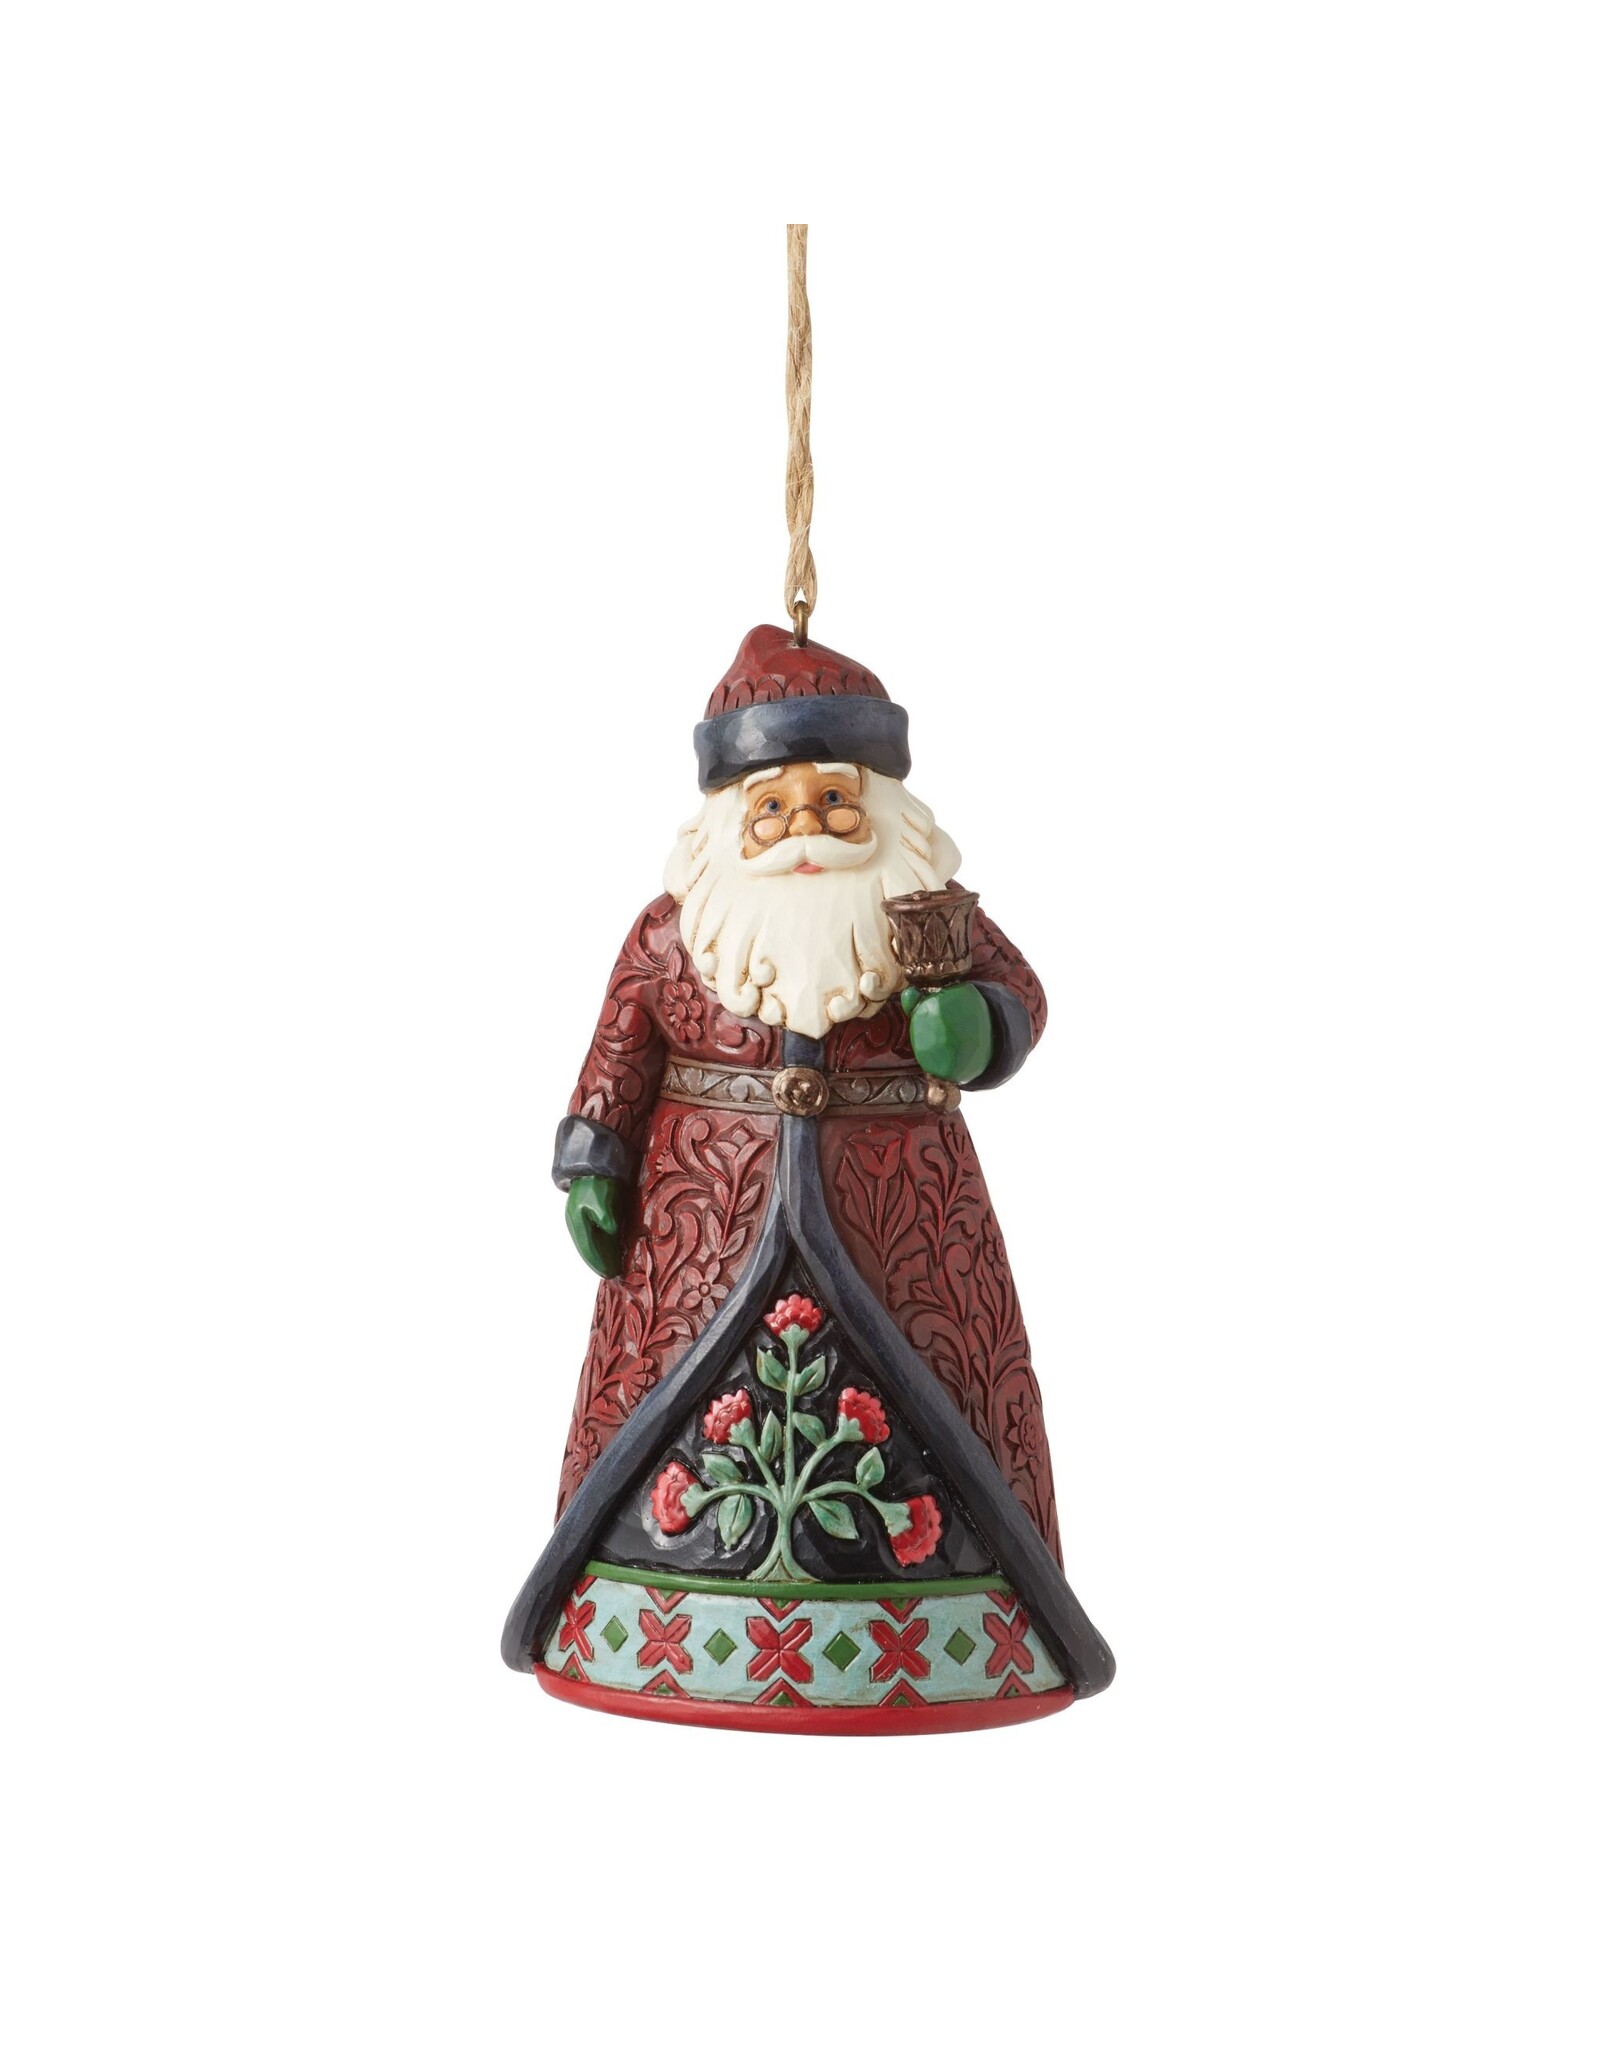 Jim Shore Holiday Manor Santa with Bell Ornament